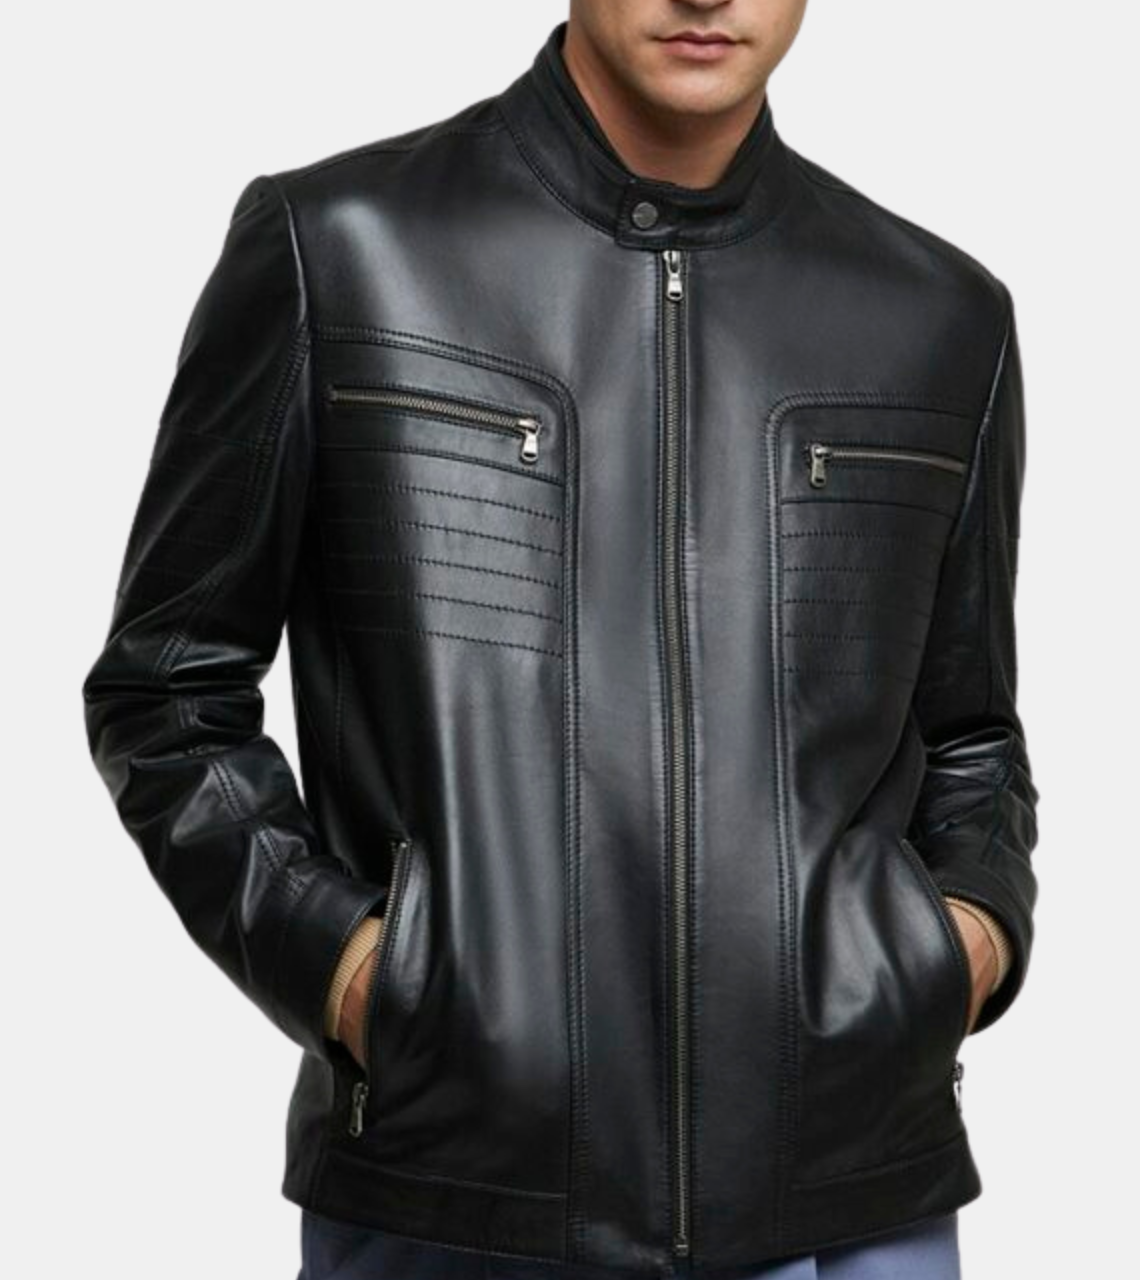 Blackwood Men's Black Leather Jacket